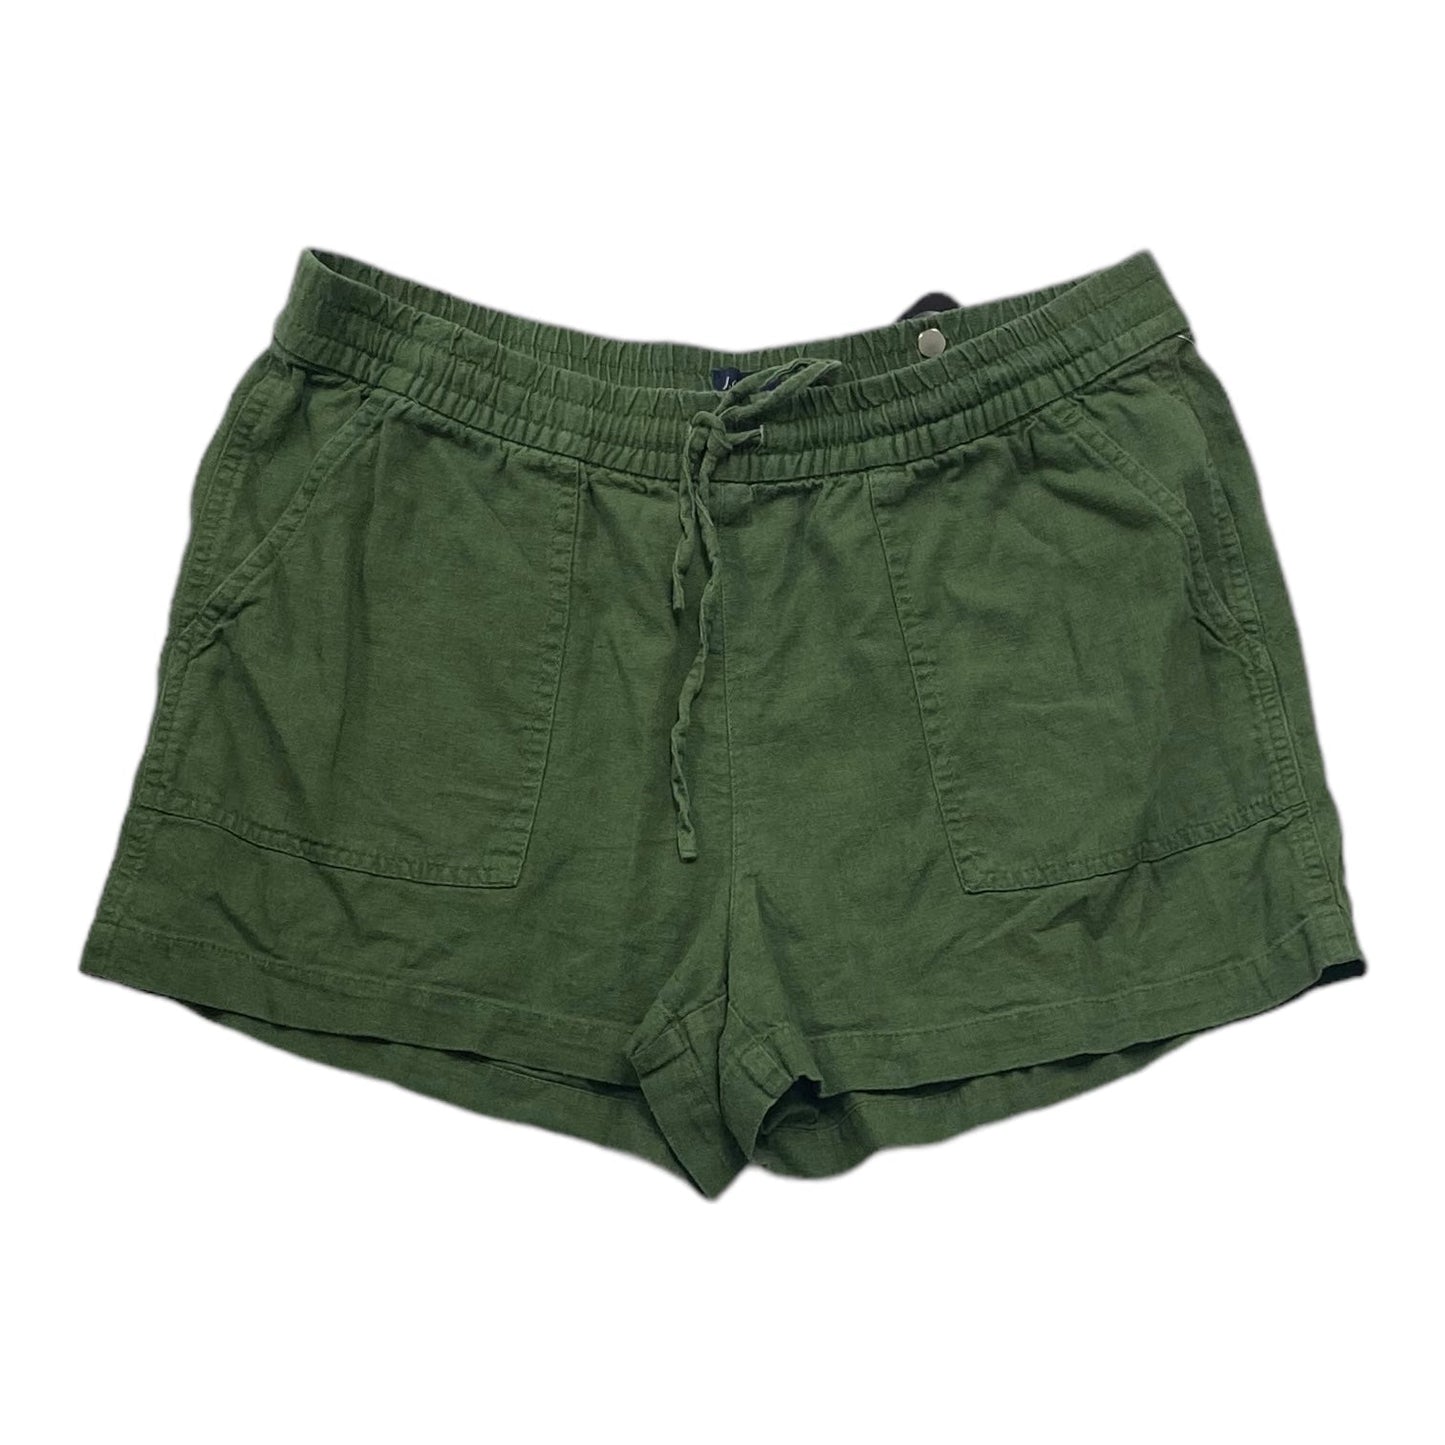 Green Shorts J. Crew, Size S